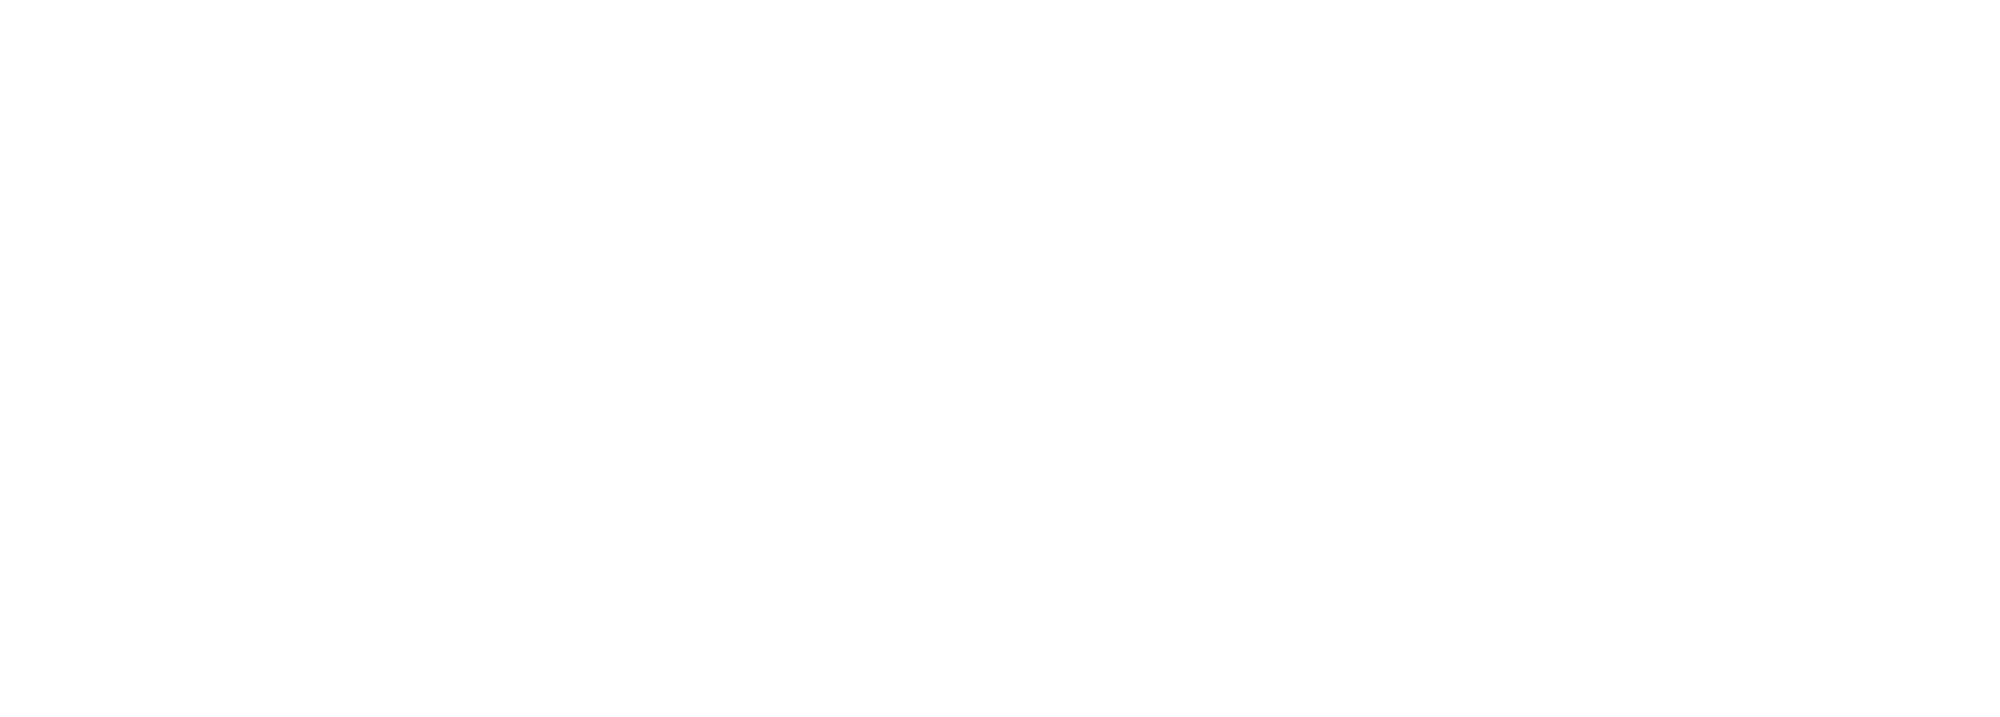 Pure Massage Boulder